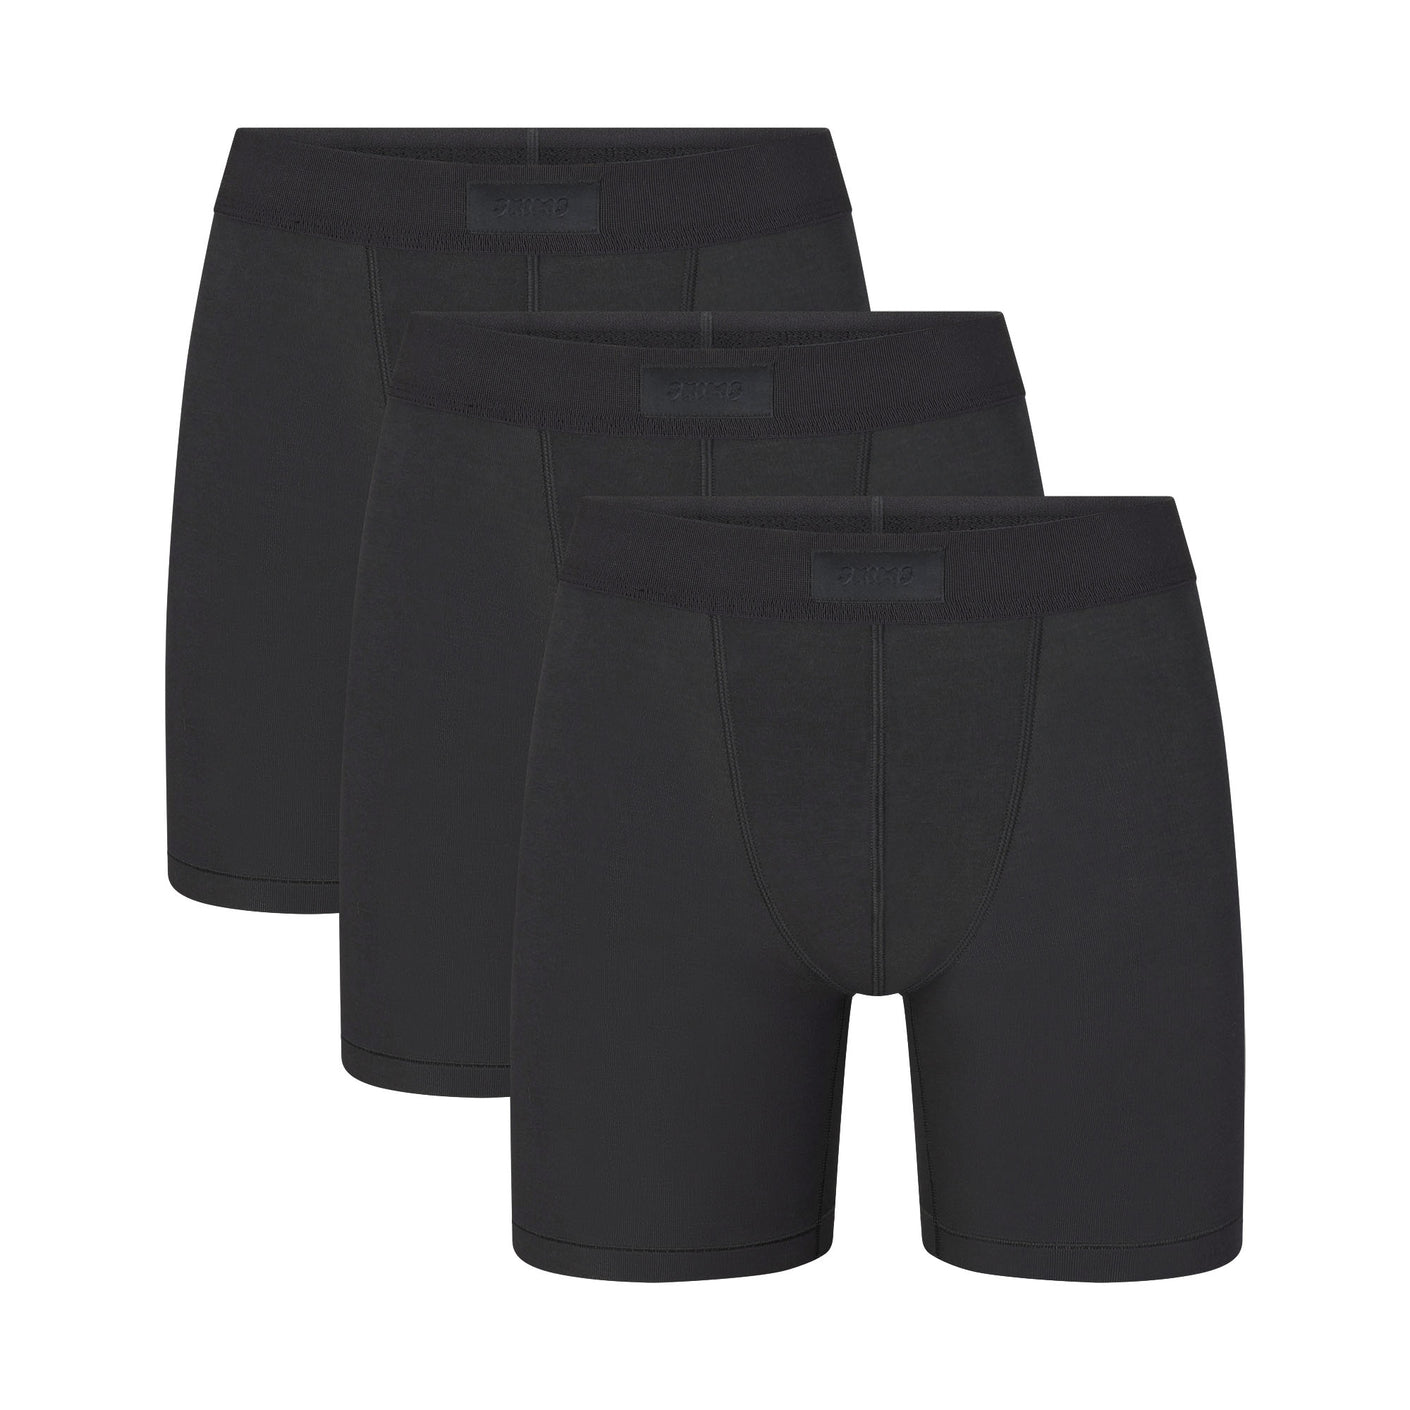 Men's Underwear Boxers • Branded Trunks & Boxer Briefs